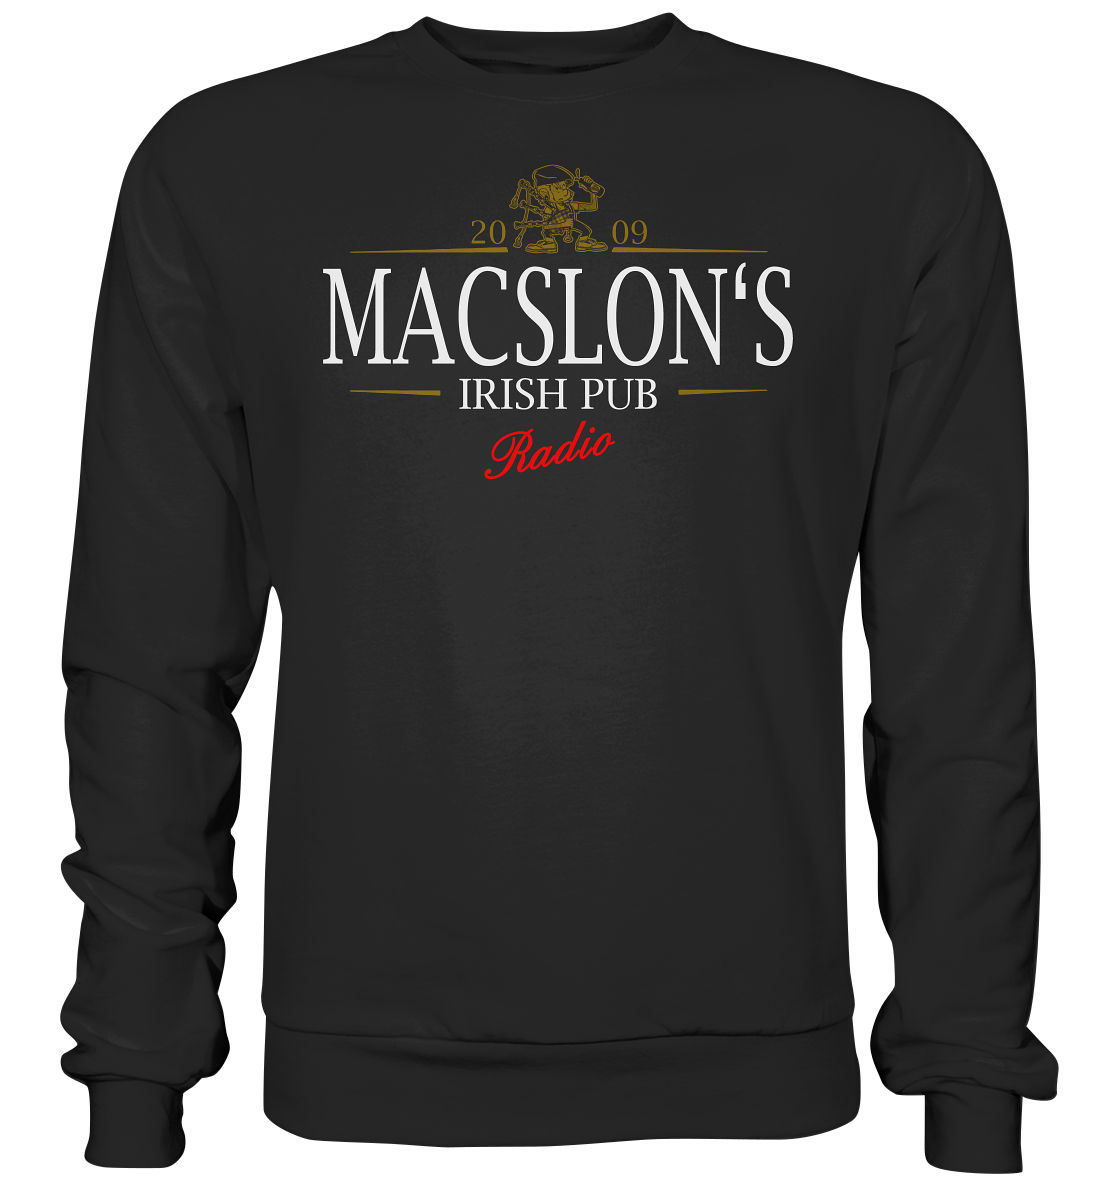 MacSlon's Irish Pub Radio "Stout" - Premium Sweatshirt